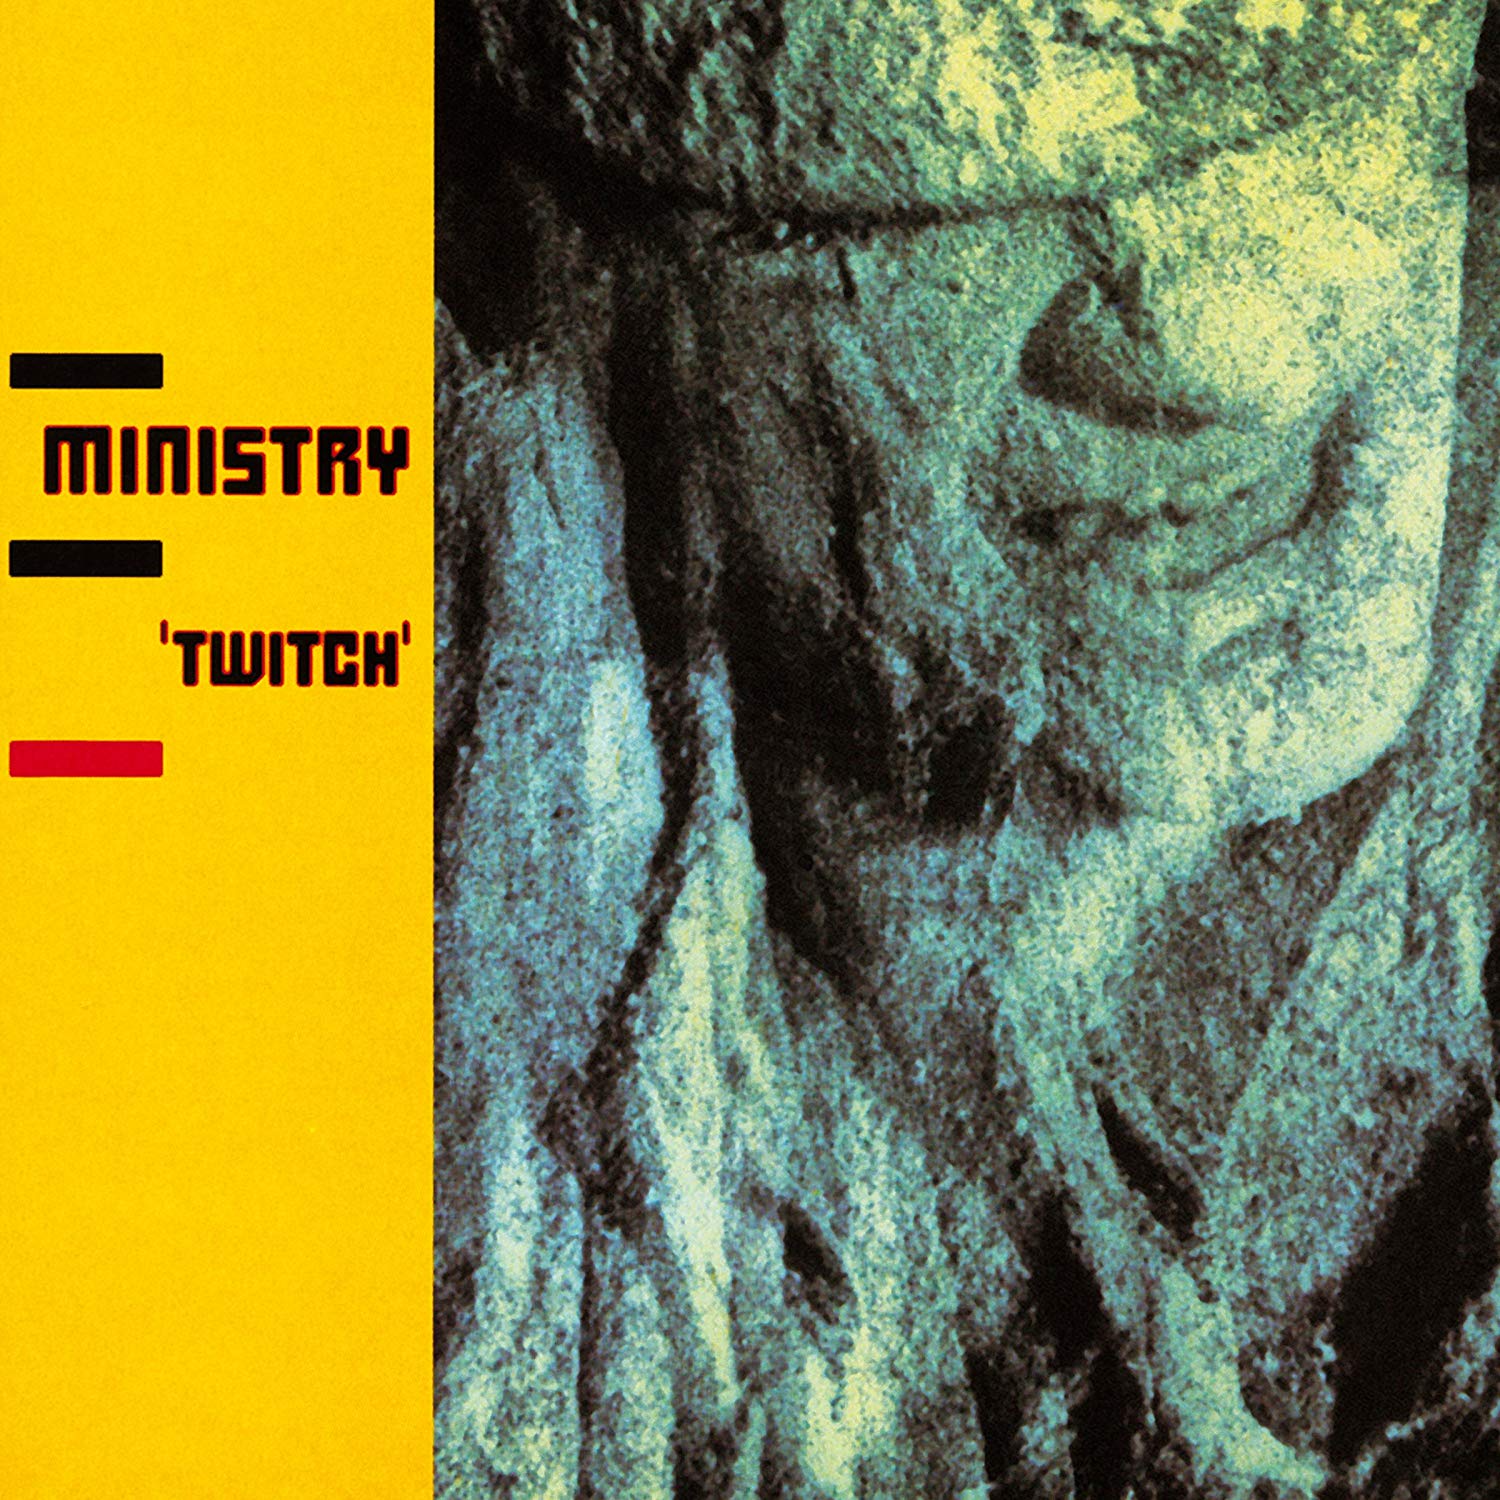 Ministry "Twitch" 180g Audiophile Black Vinyl